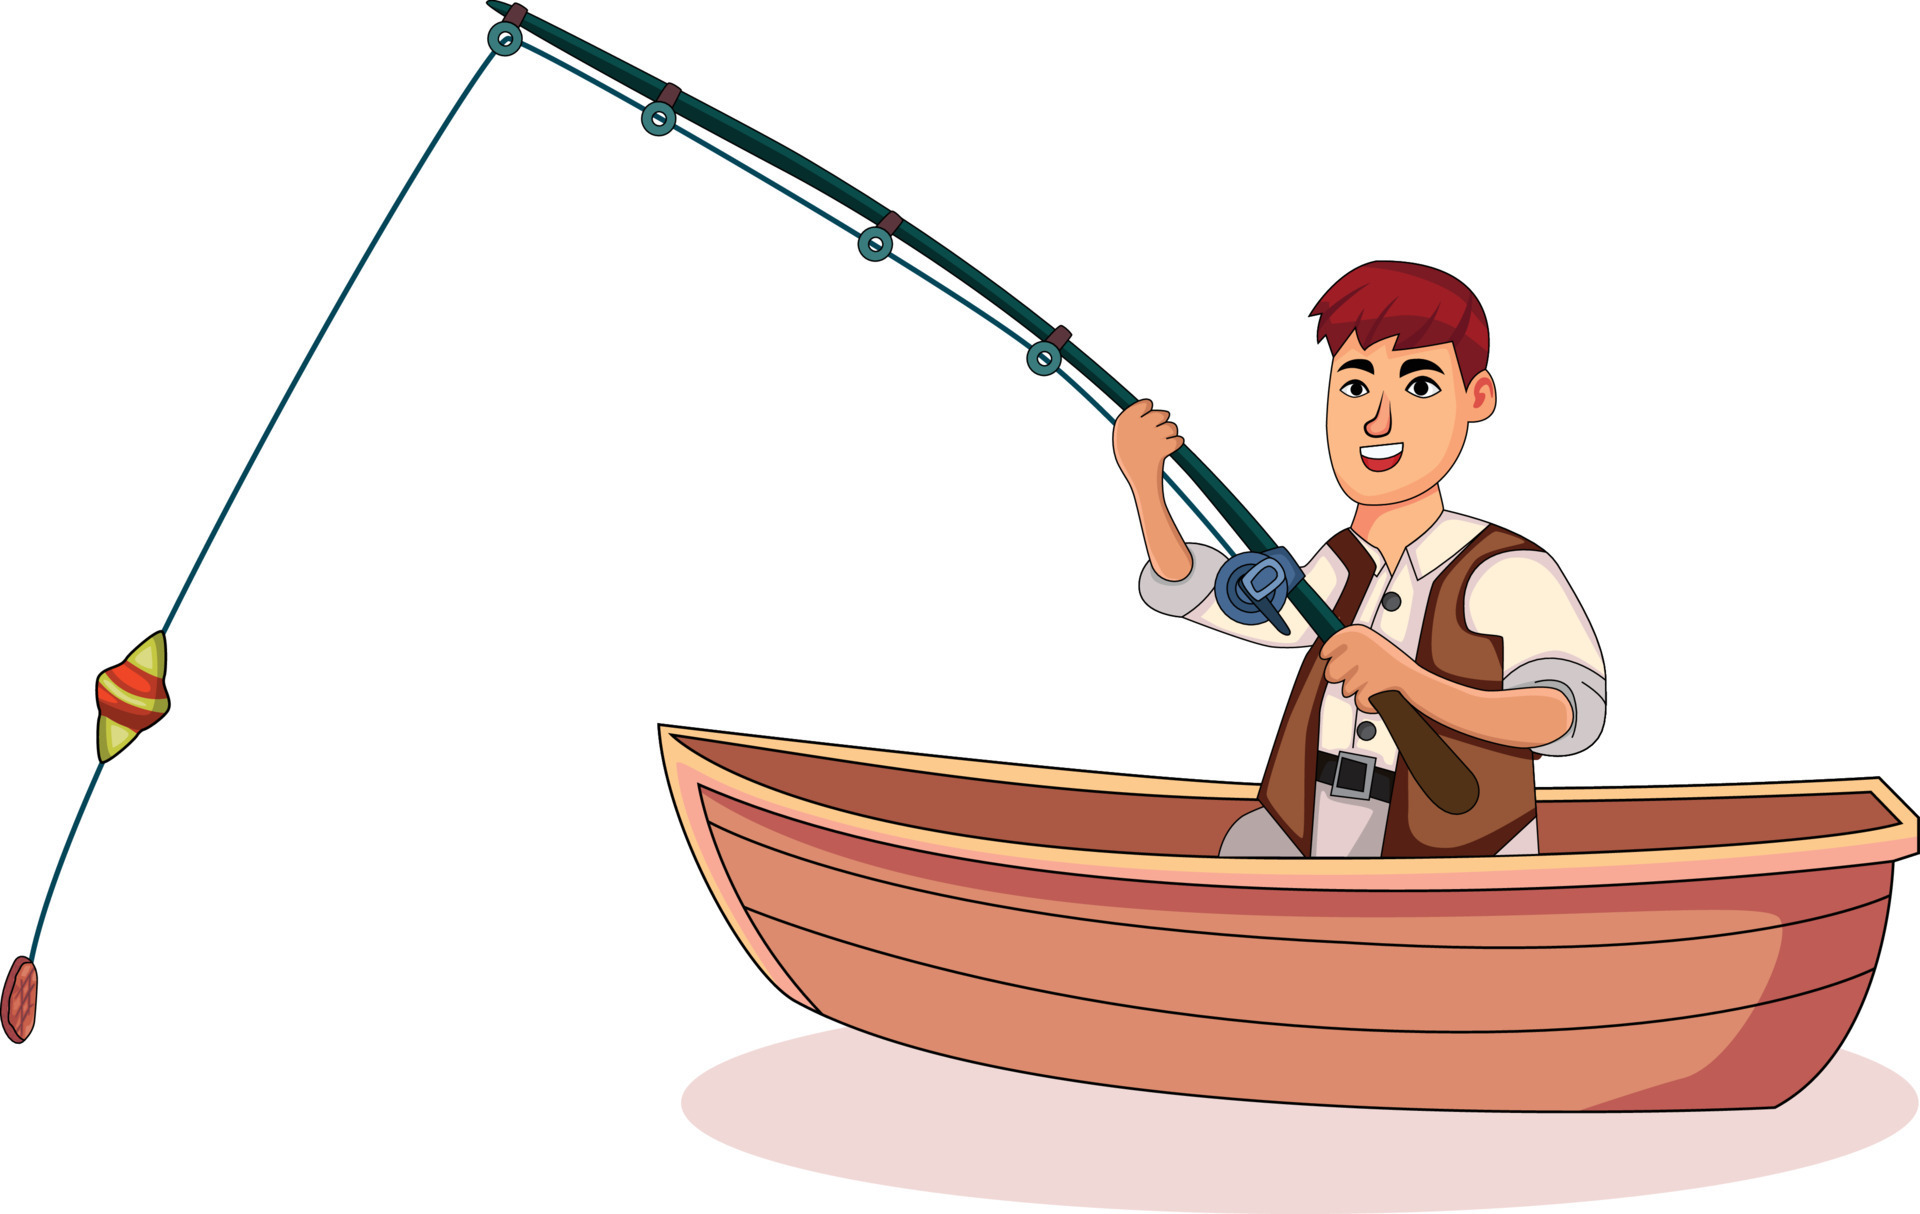 Fisherman catching fish on the boat, cartoon scene 21846975 Vector